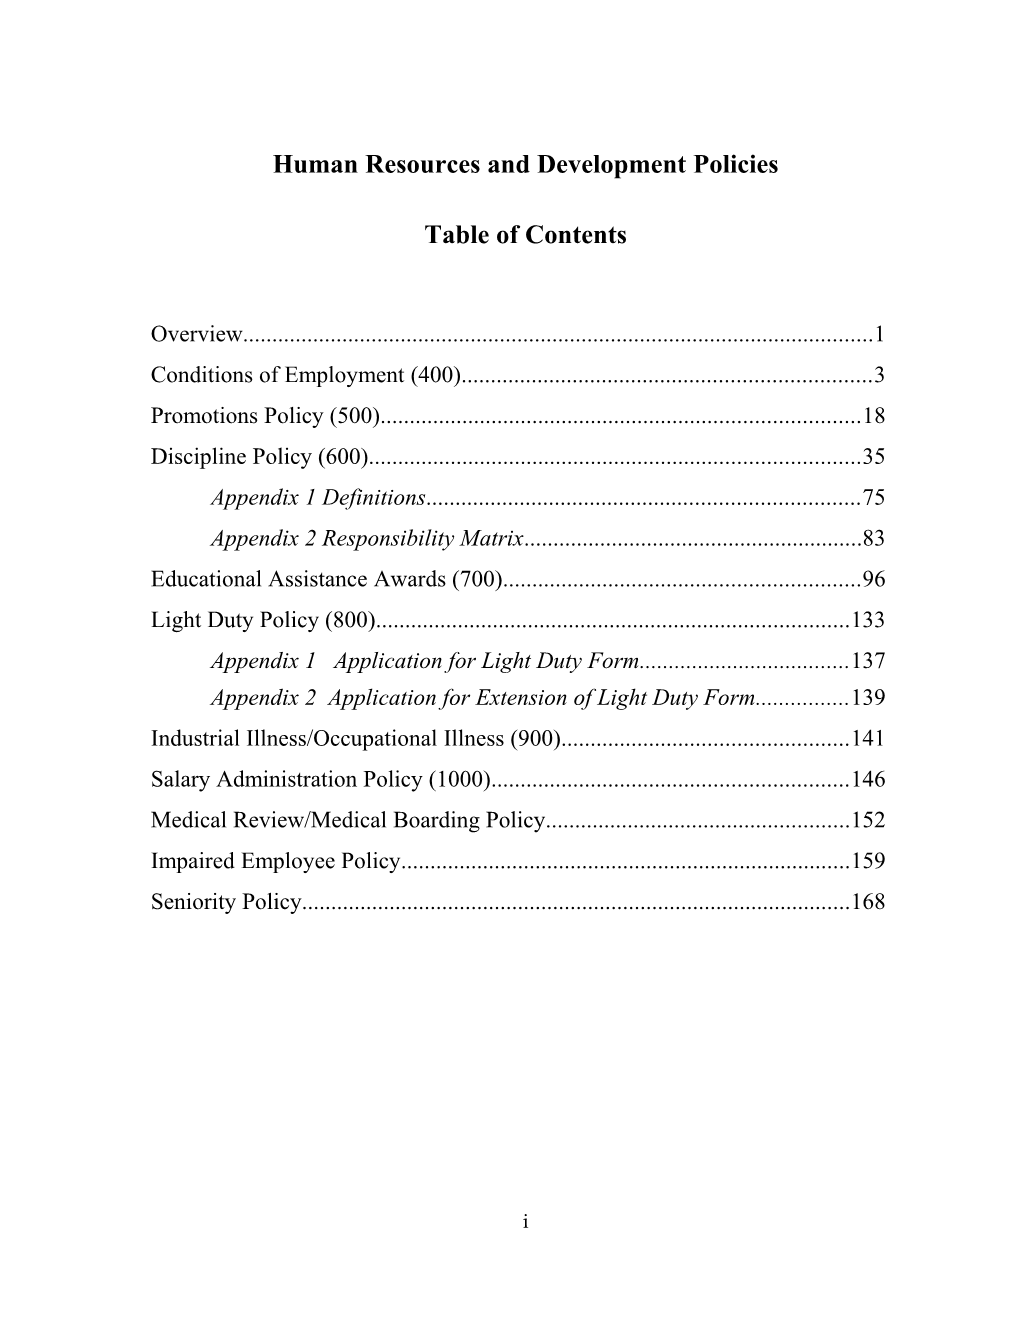 Human Resources Training & Development Policies